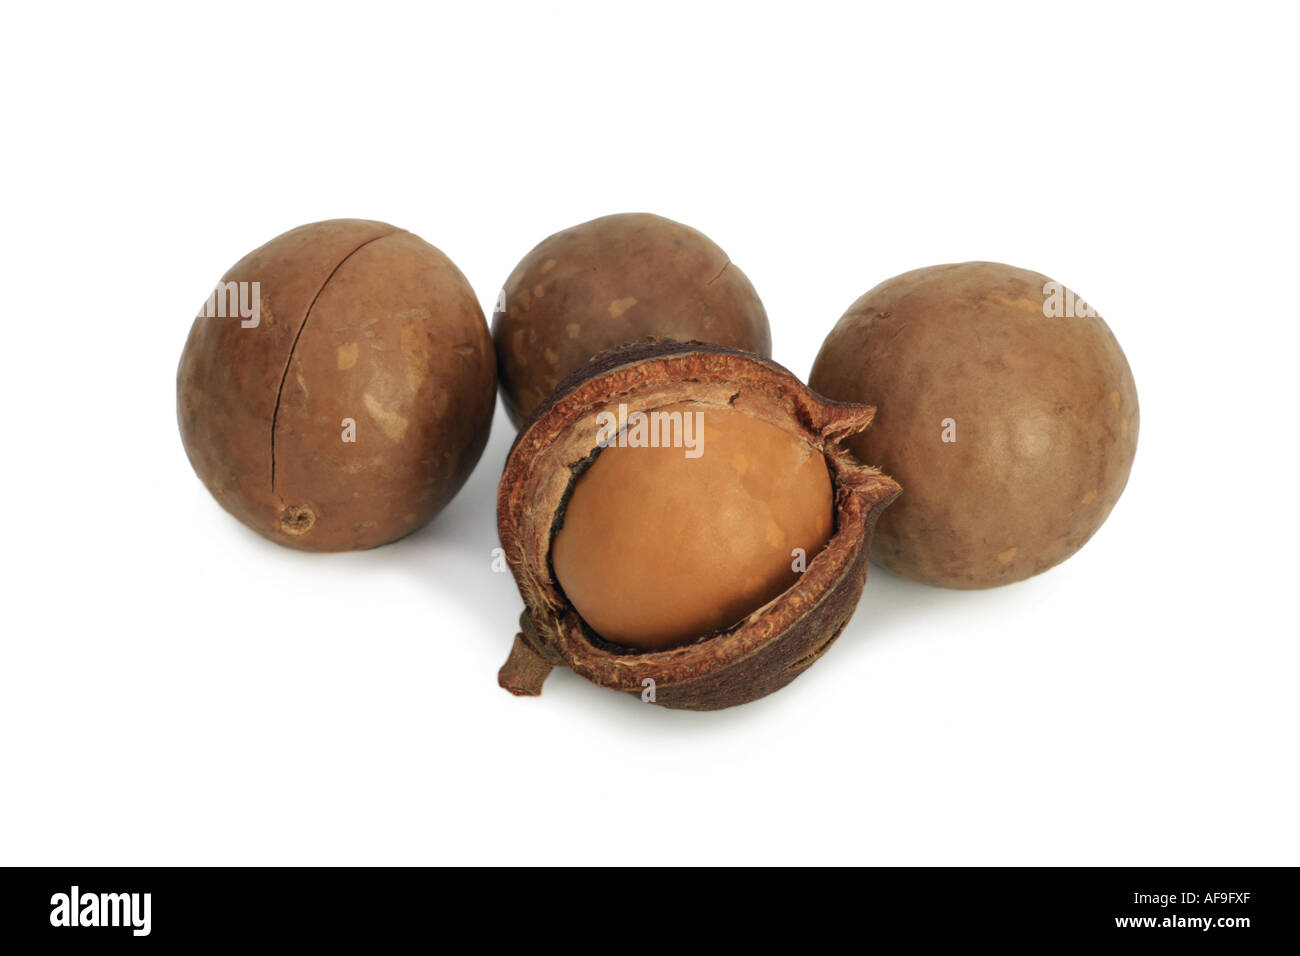 macadamia (Macadamia integrifolia), nut and nut in opening husk Stock Photo